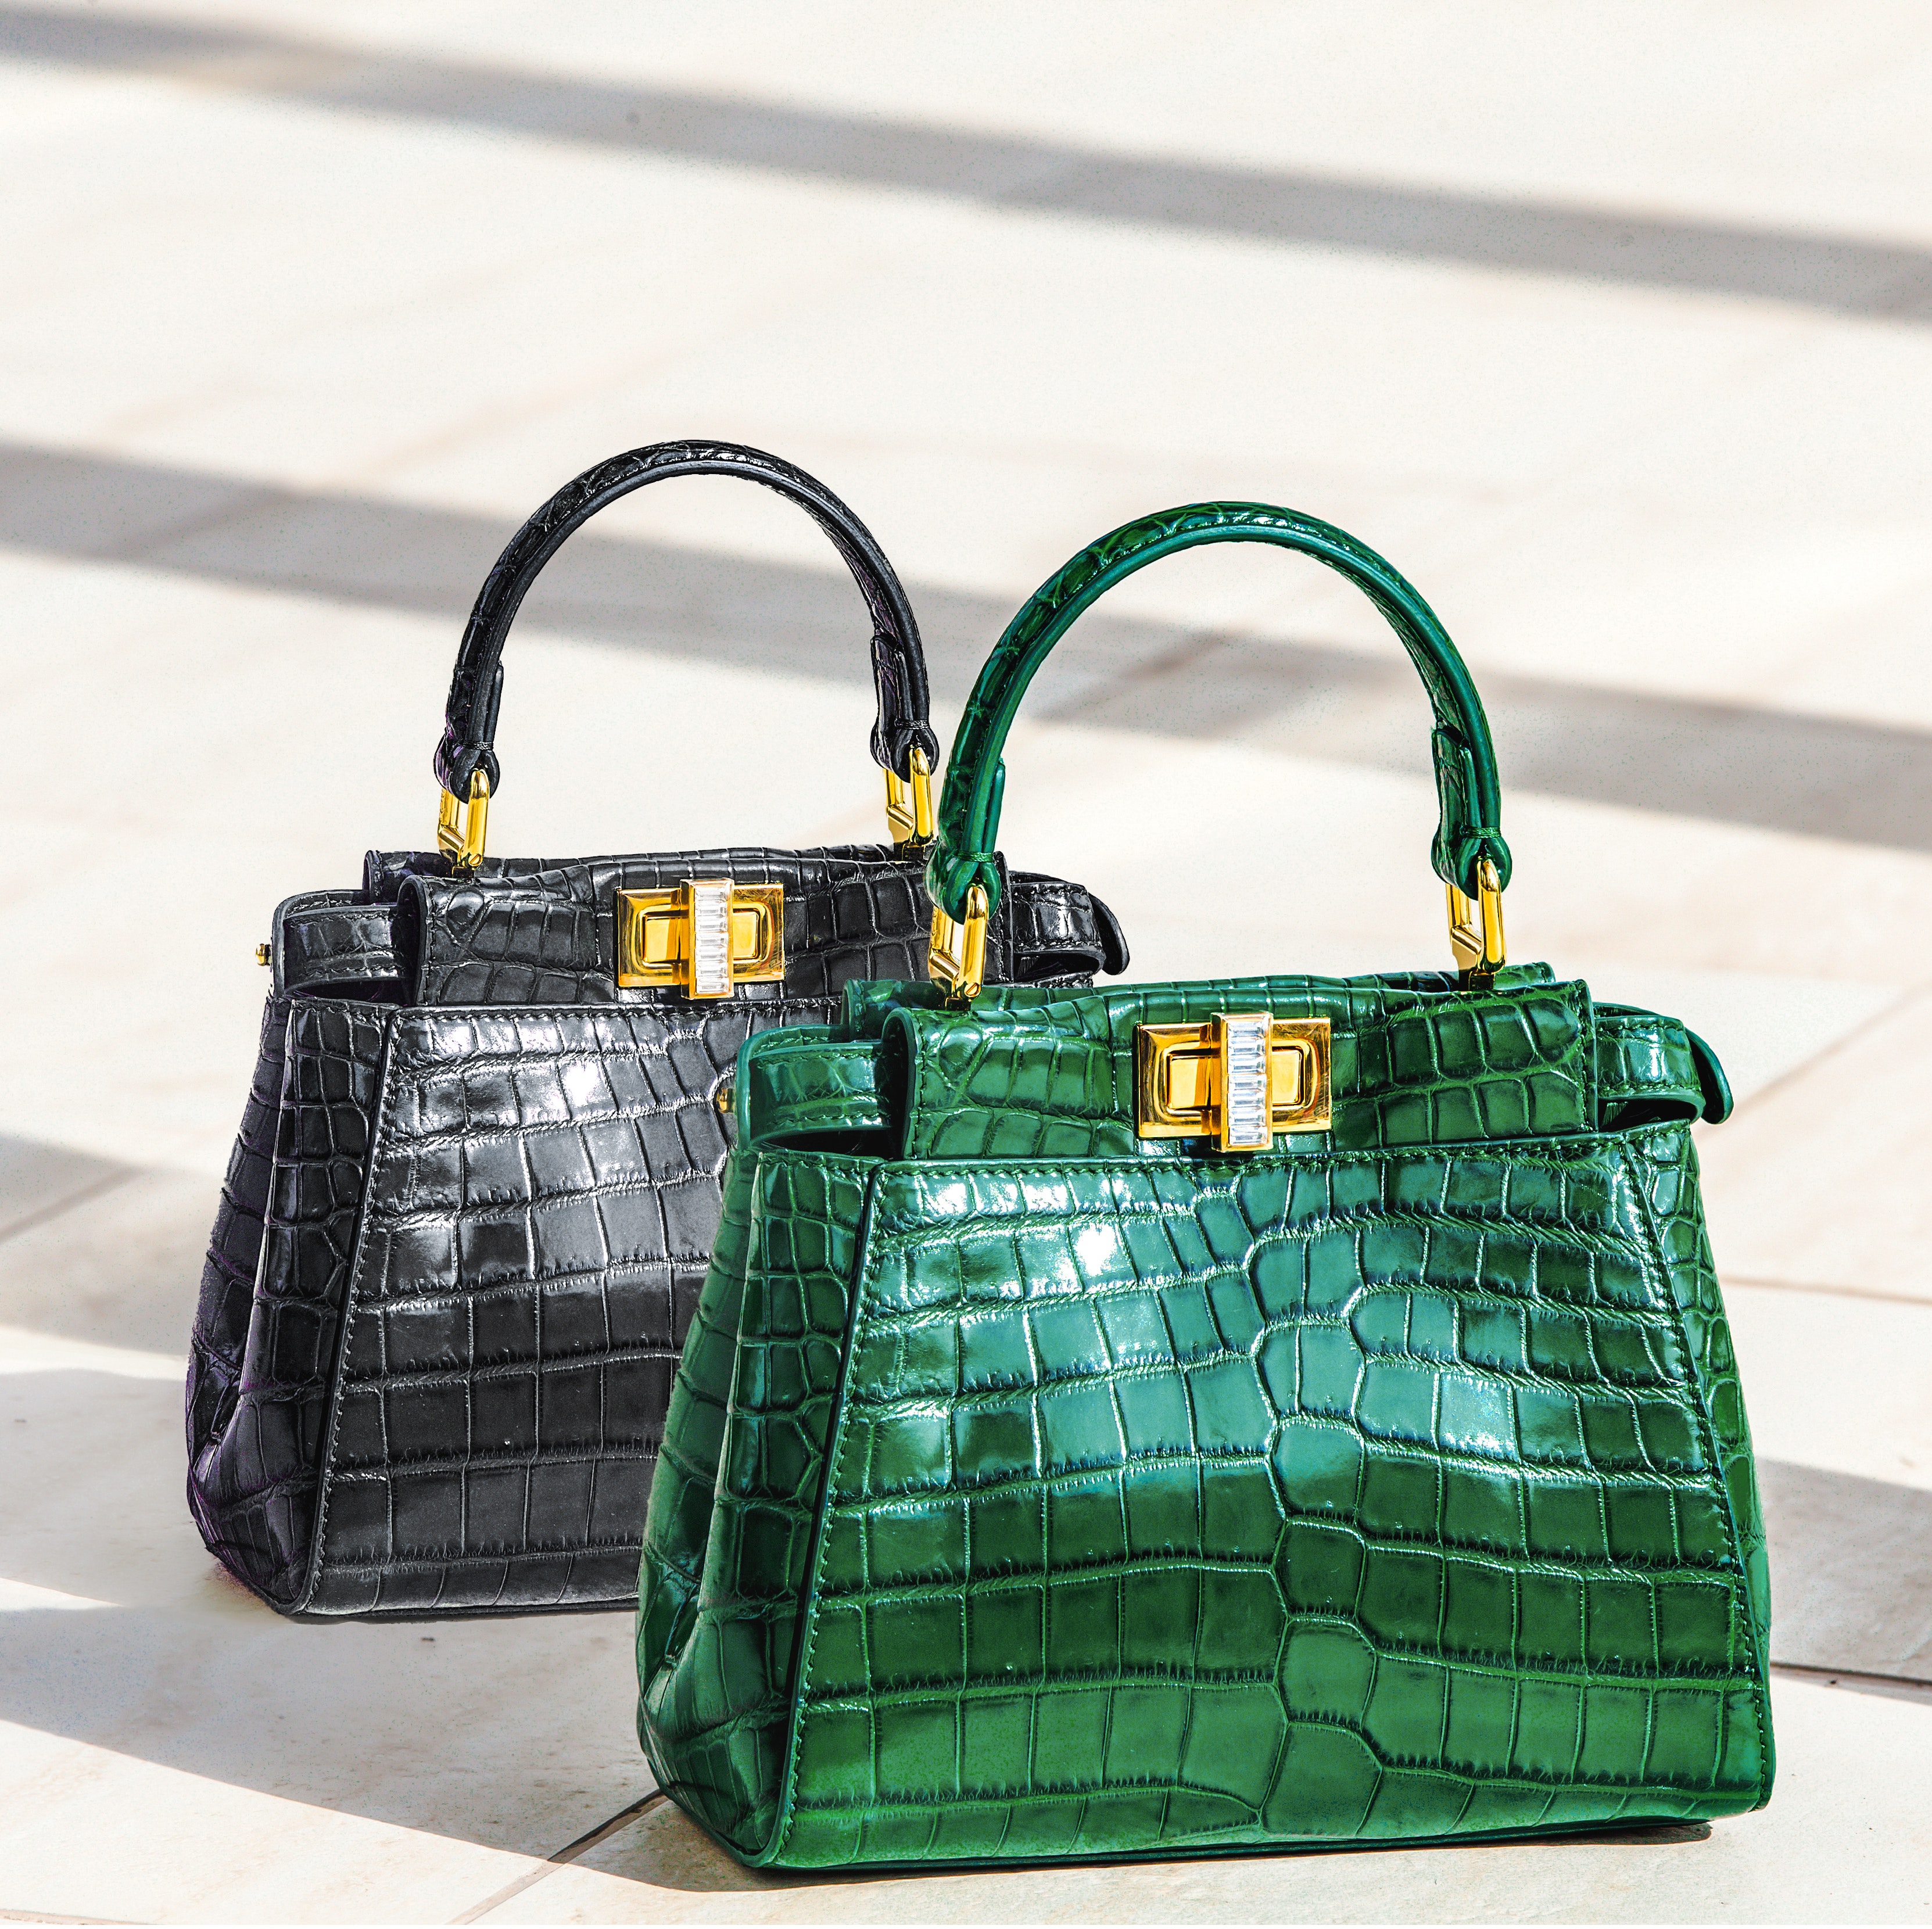 Luxury handbags jump in price as brands make up for coronavirus hit -  2020-05-14